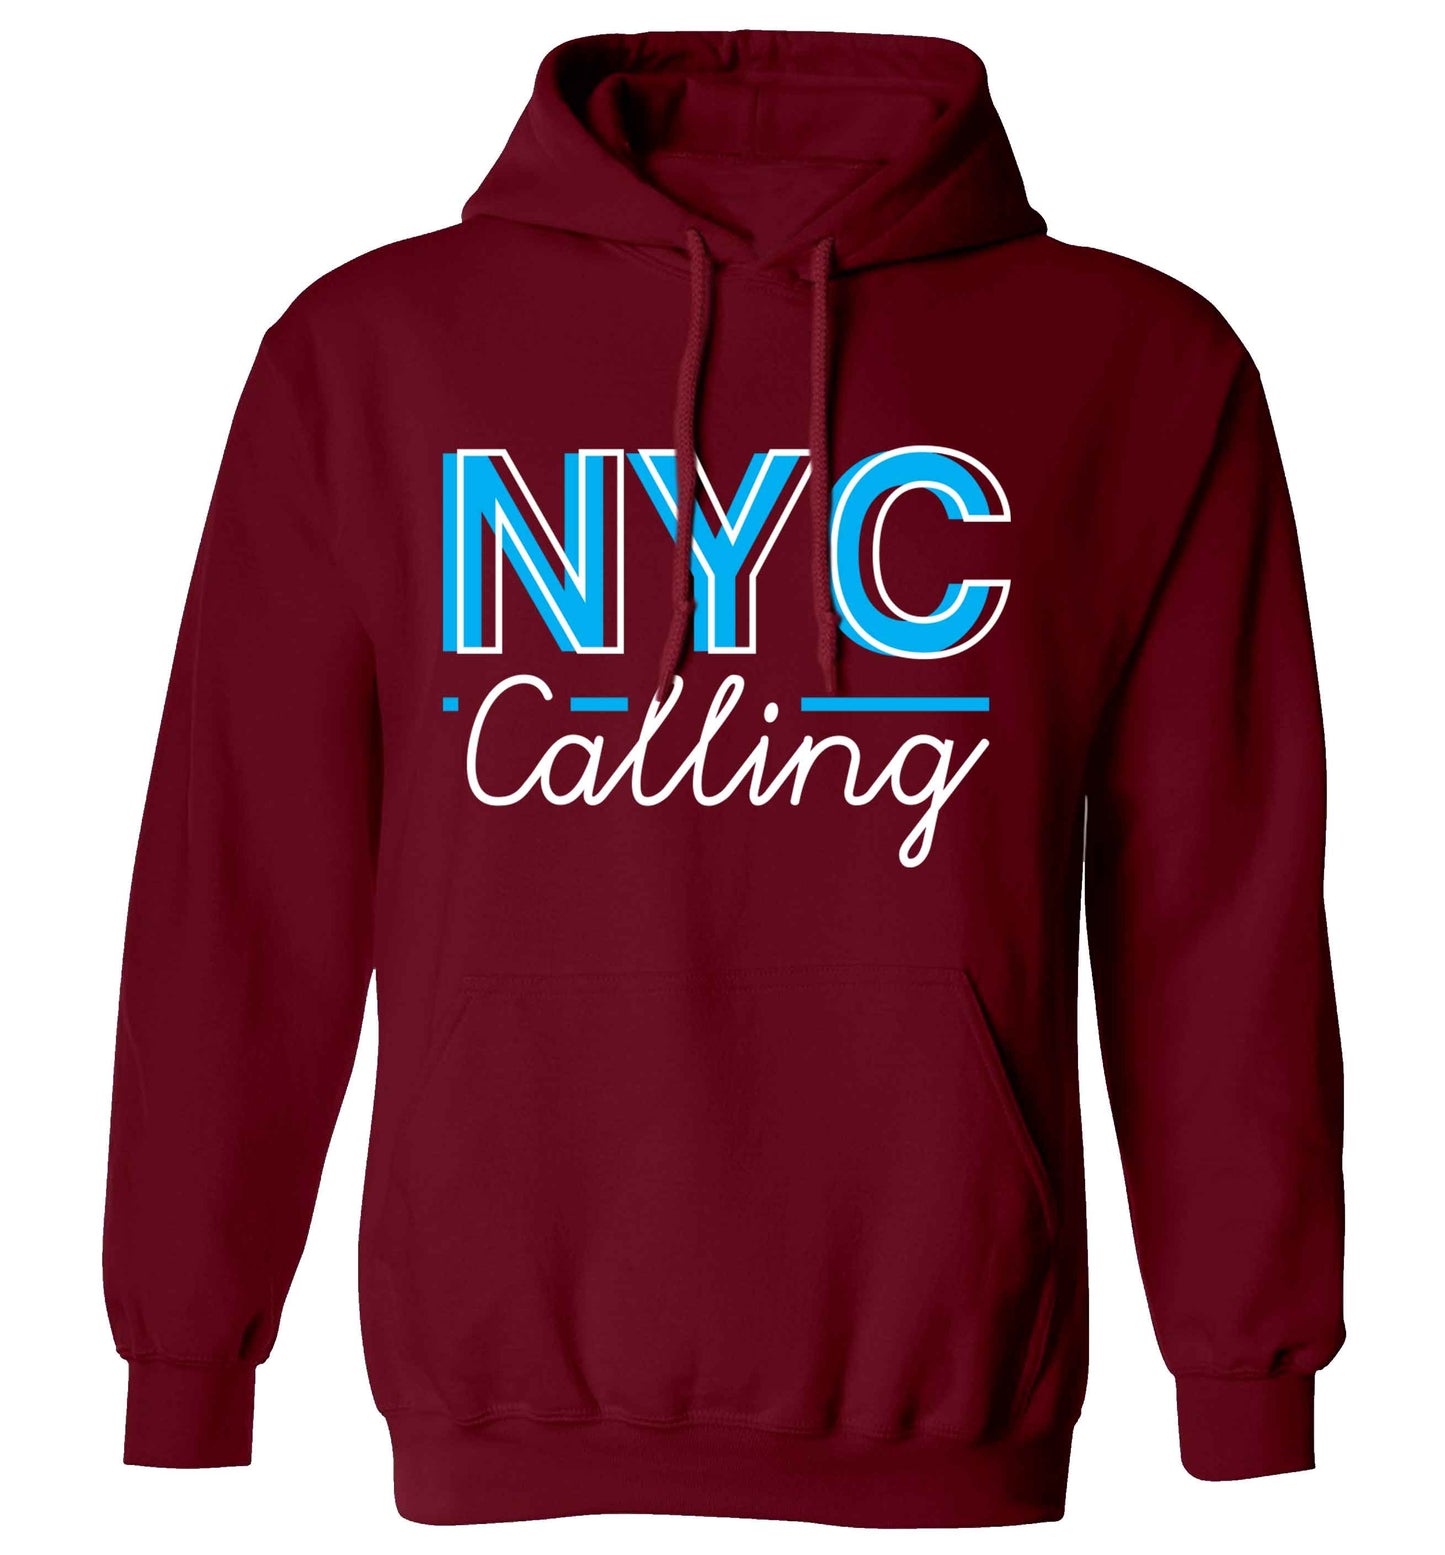 NYC calling adults unisex maroon hoodie 2XL